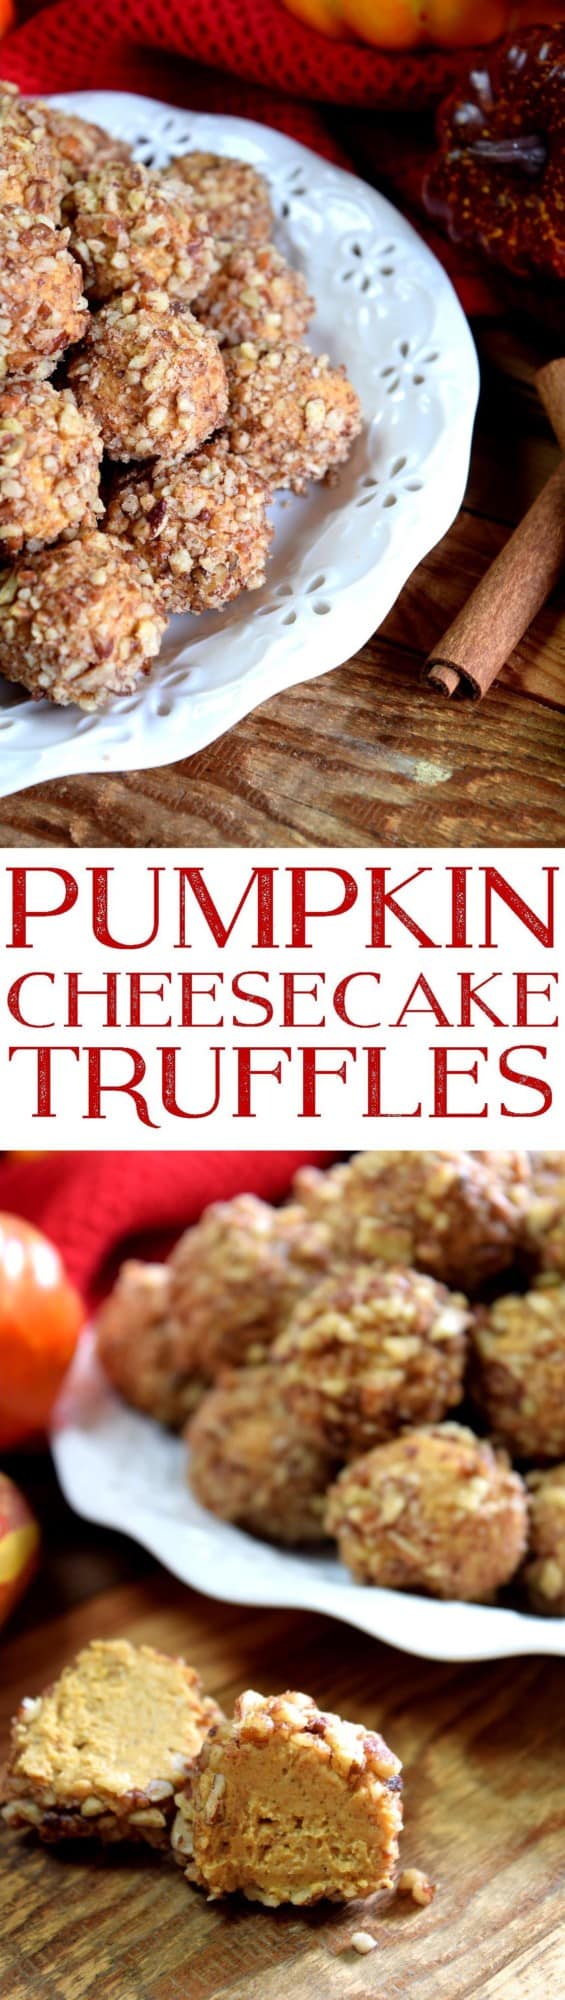 Pumpkin Cheesecake Truffles